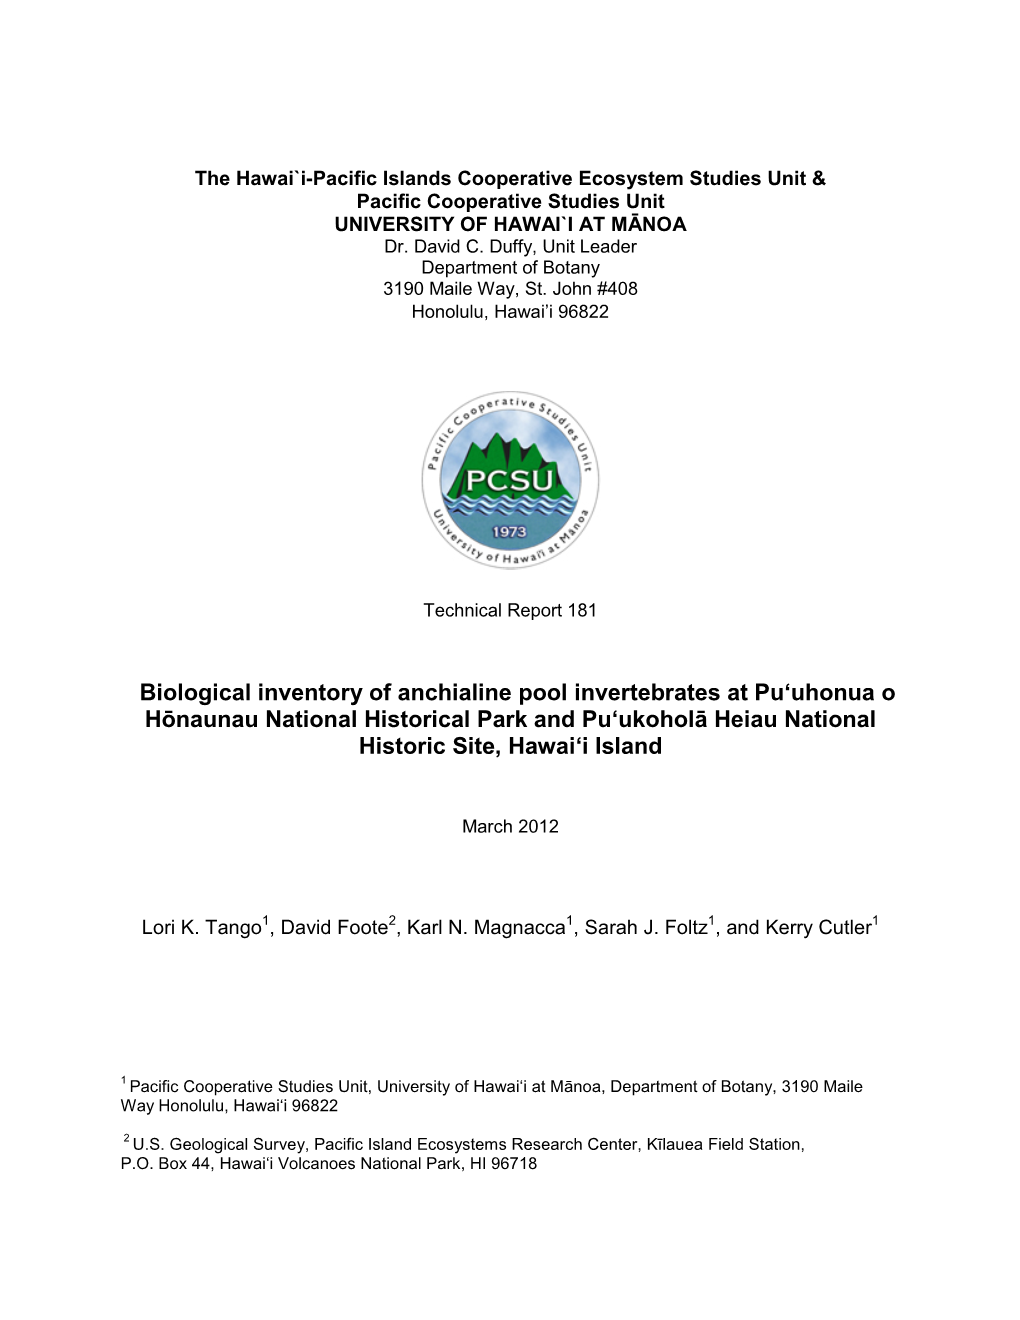 Biological Inventory of Anchialine Pool Invertebrates at Pu'uhonua O